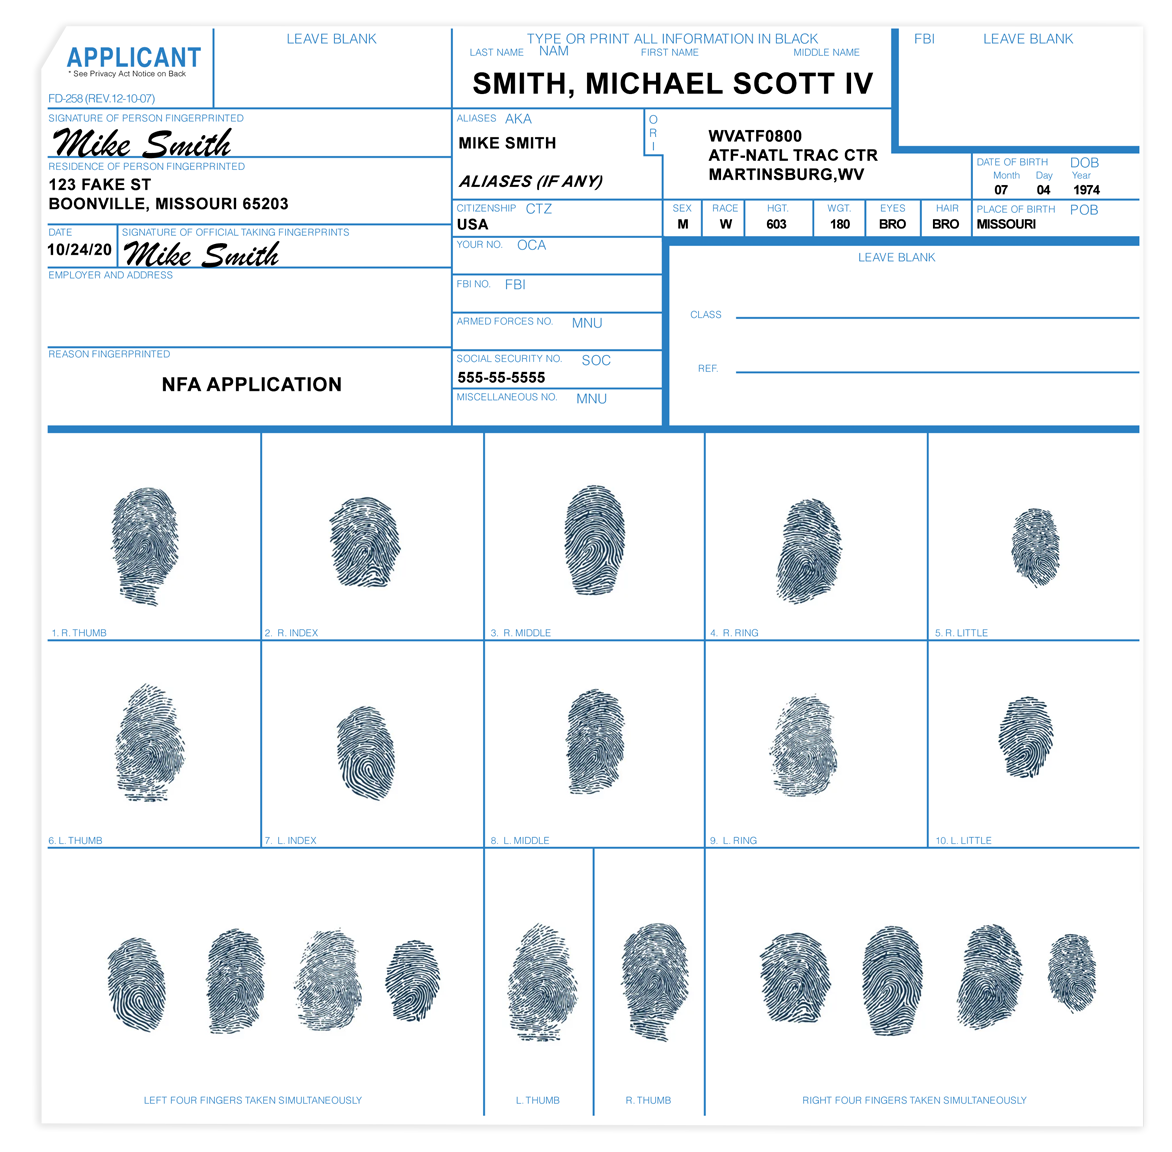 ATF Compliant FD-258 Fingerprint Cards Walk-Through Guide, 49% OFF